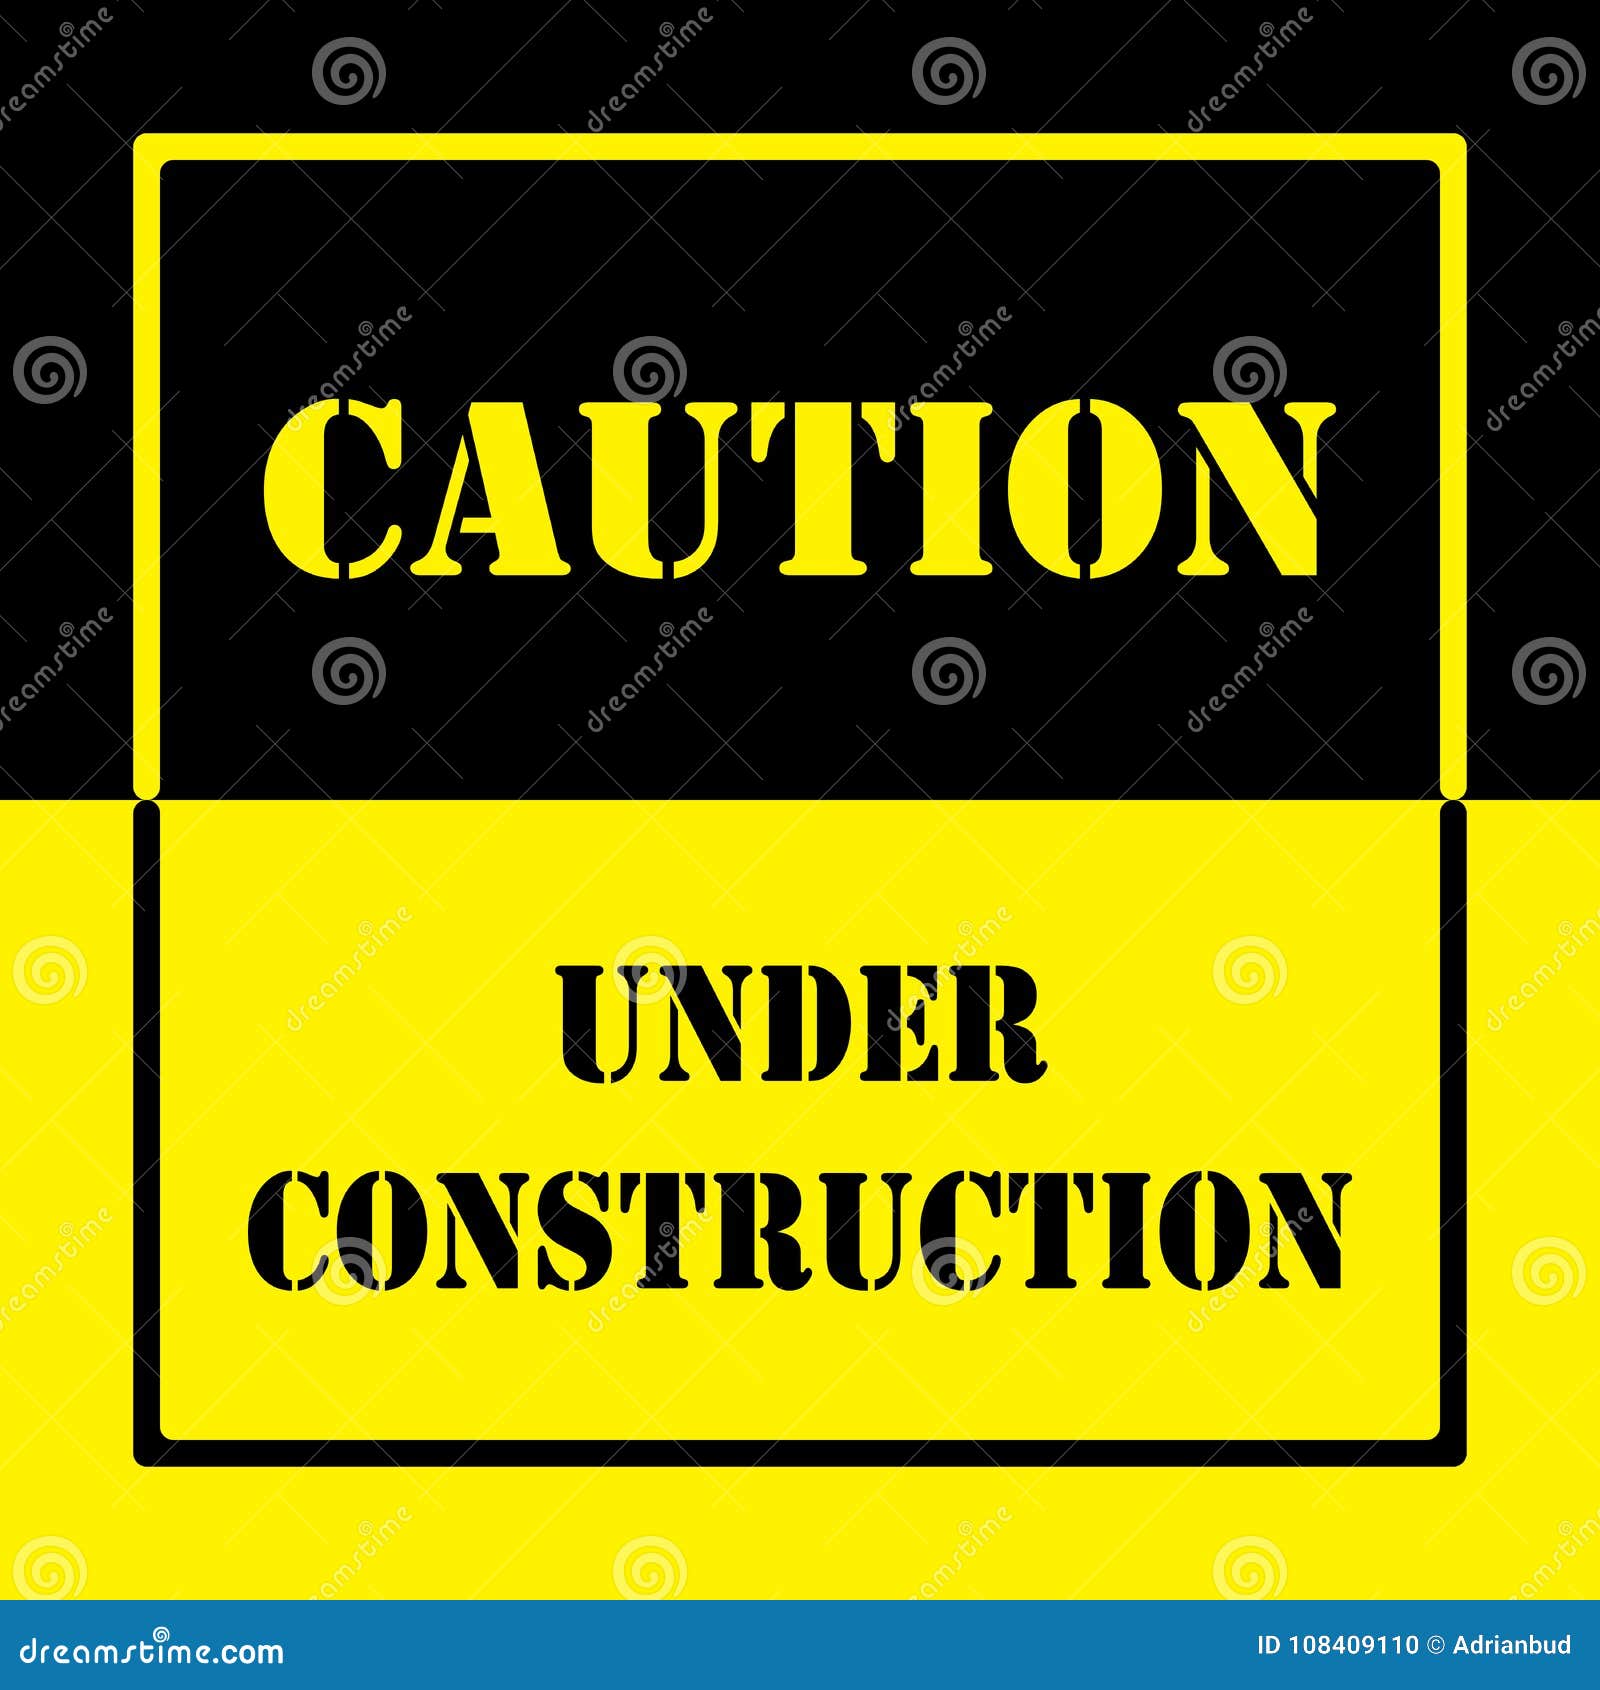 CAUTION UNDER CONSTRUCTION WARNING SIGN Stock Vector - Illustration of ...